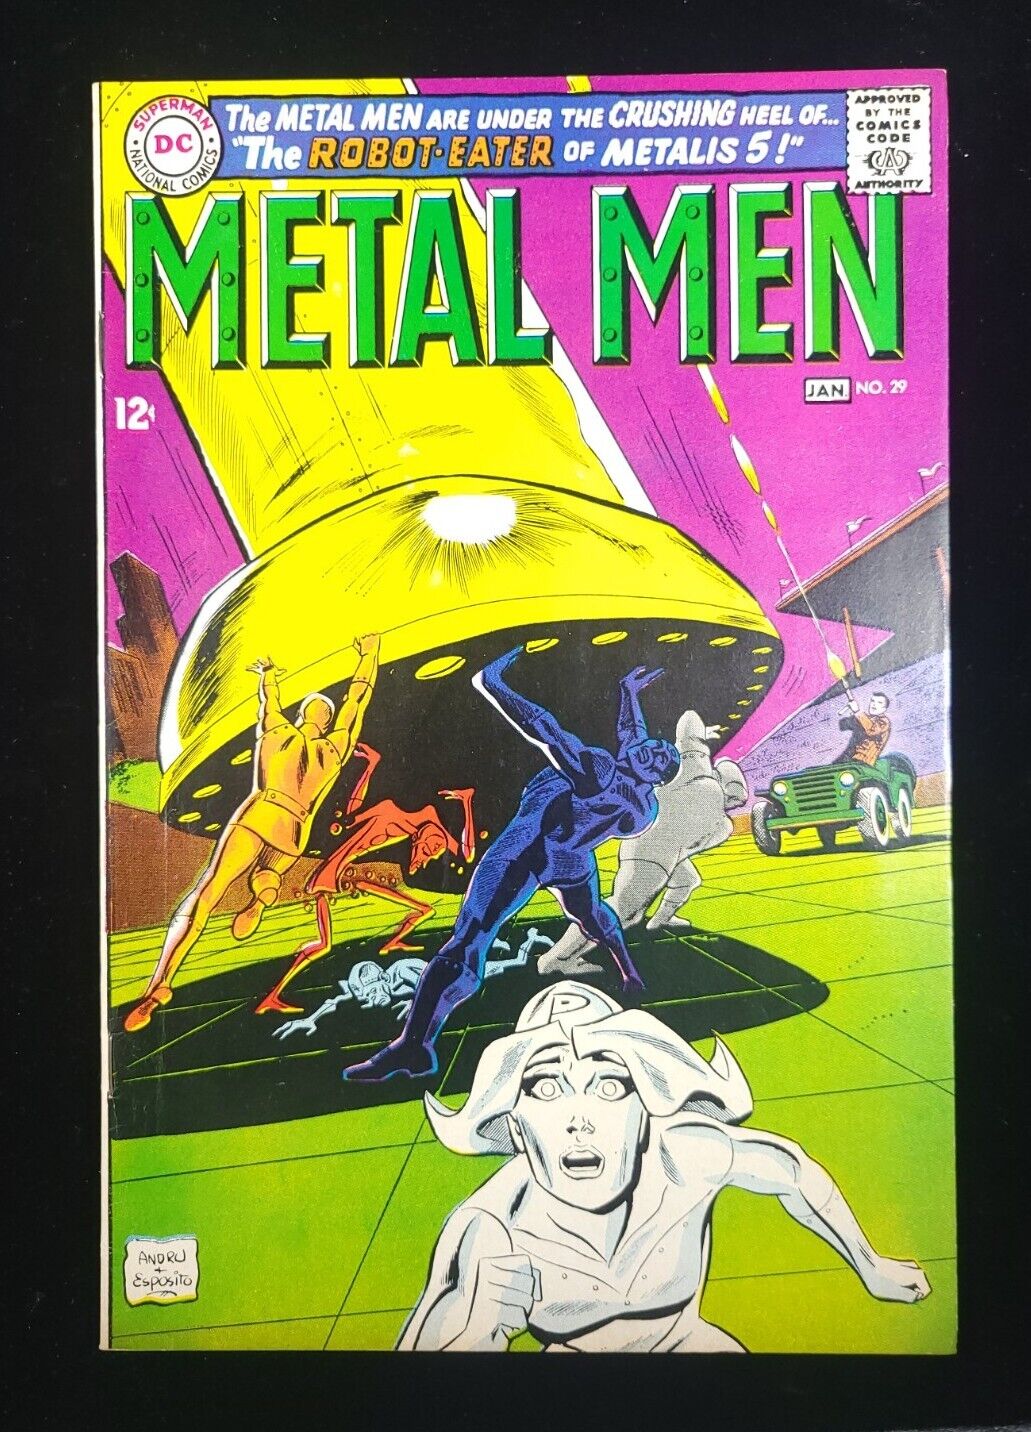 Metal Men #29 DC Comics 1968 Silver age ross andru esposito cover art FN+ (6.5)